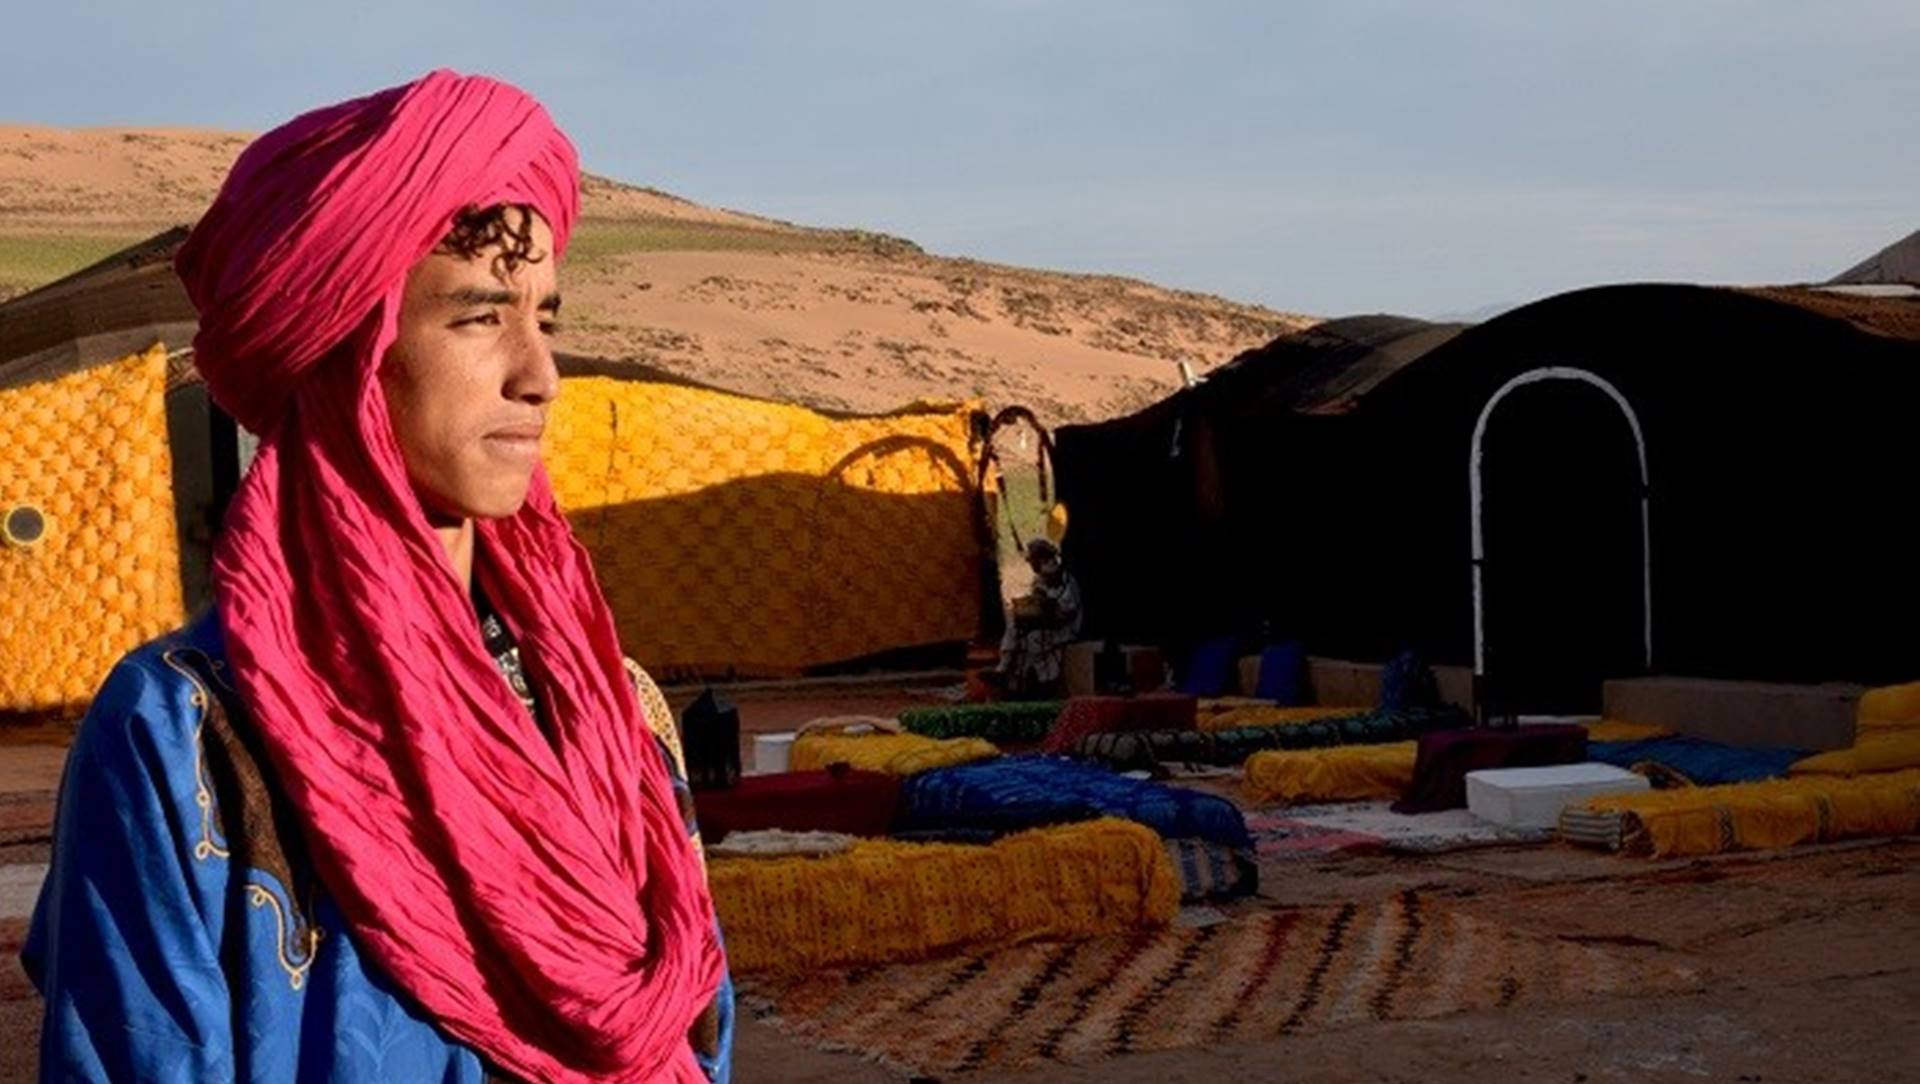 Morocco - a trip to the Sahara, the home of the Berbers - PHOTO